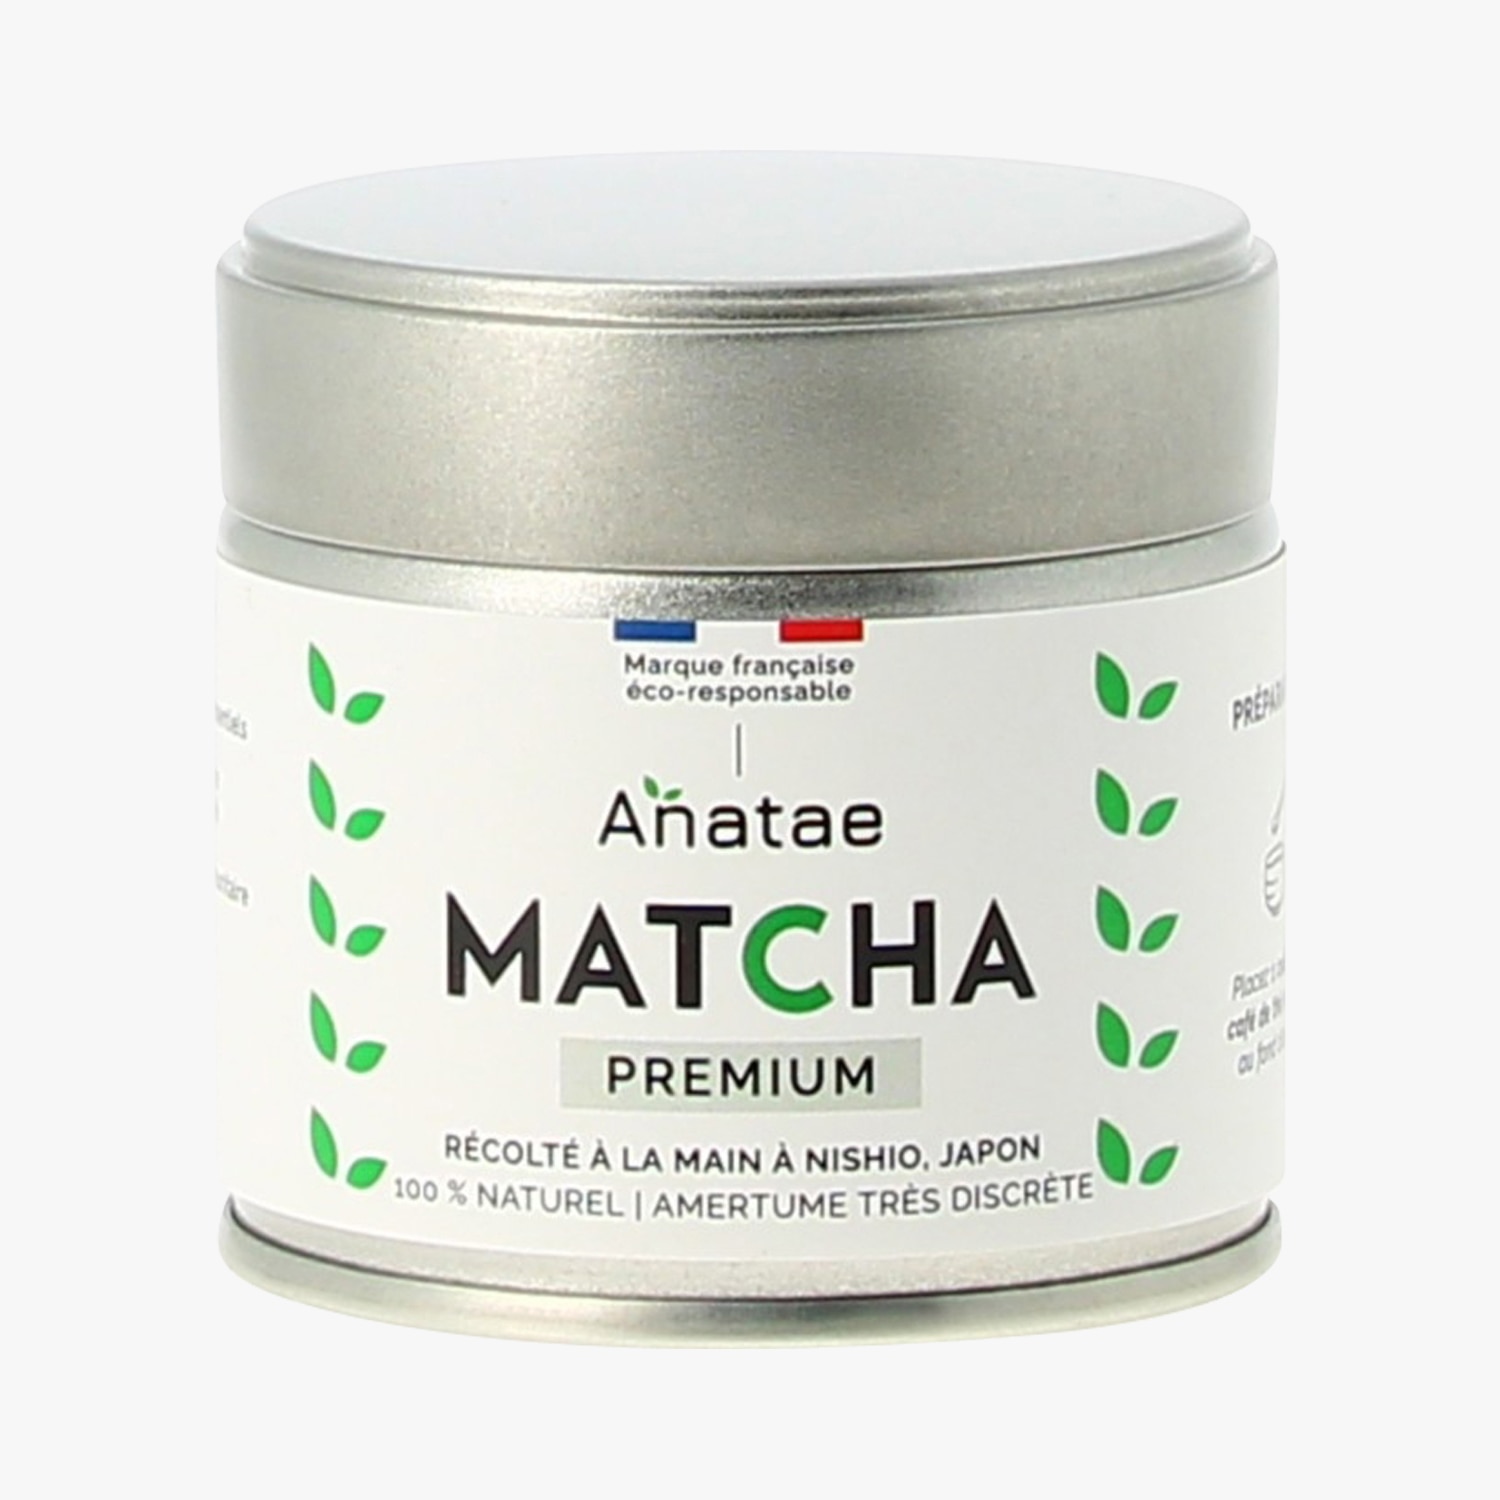 Anatae sur LinkedIn : #anataematcha #comptoiràmatcha #paris #boutique # matcha #anatae